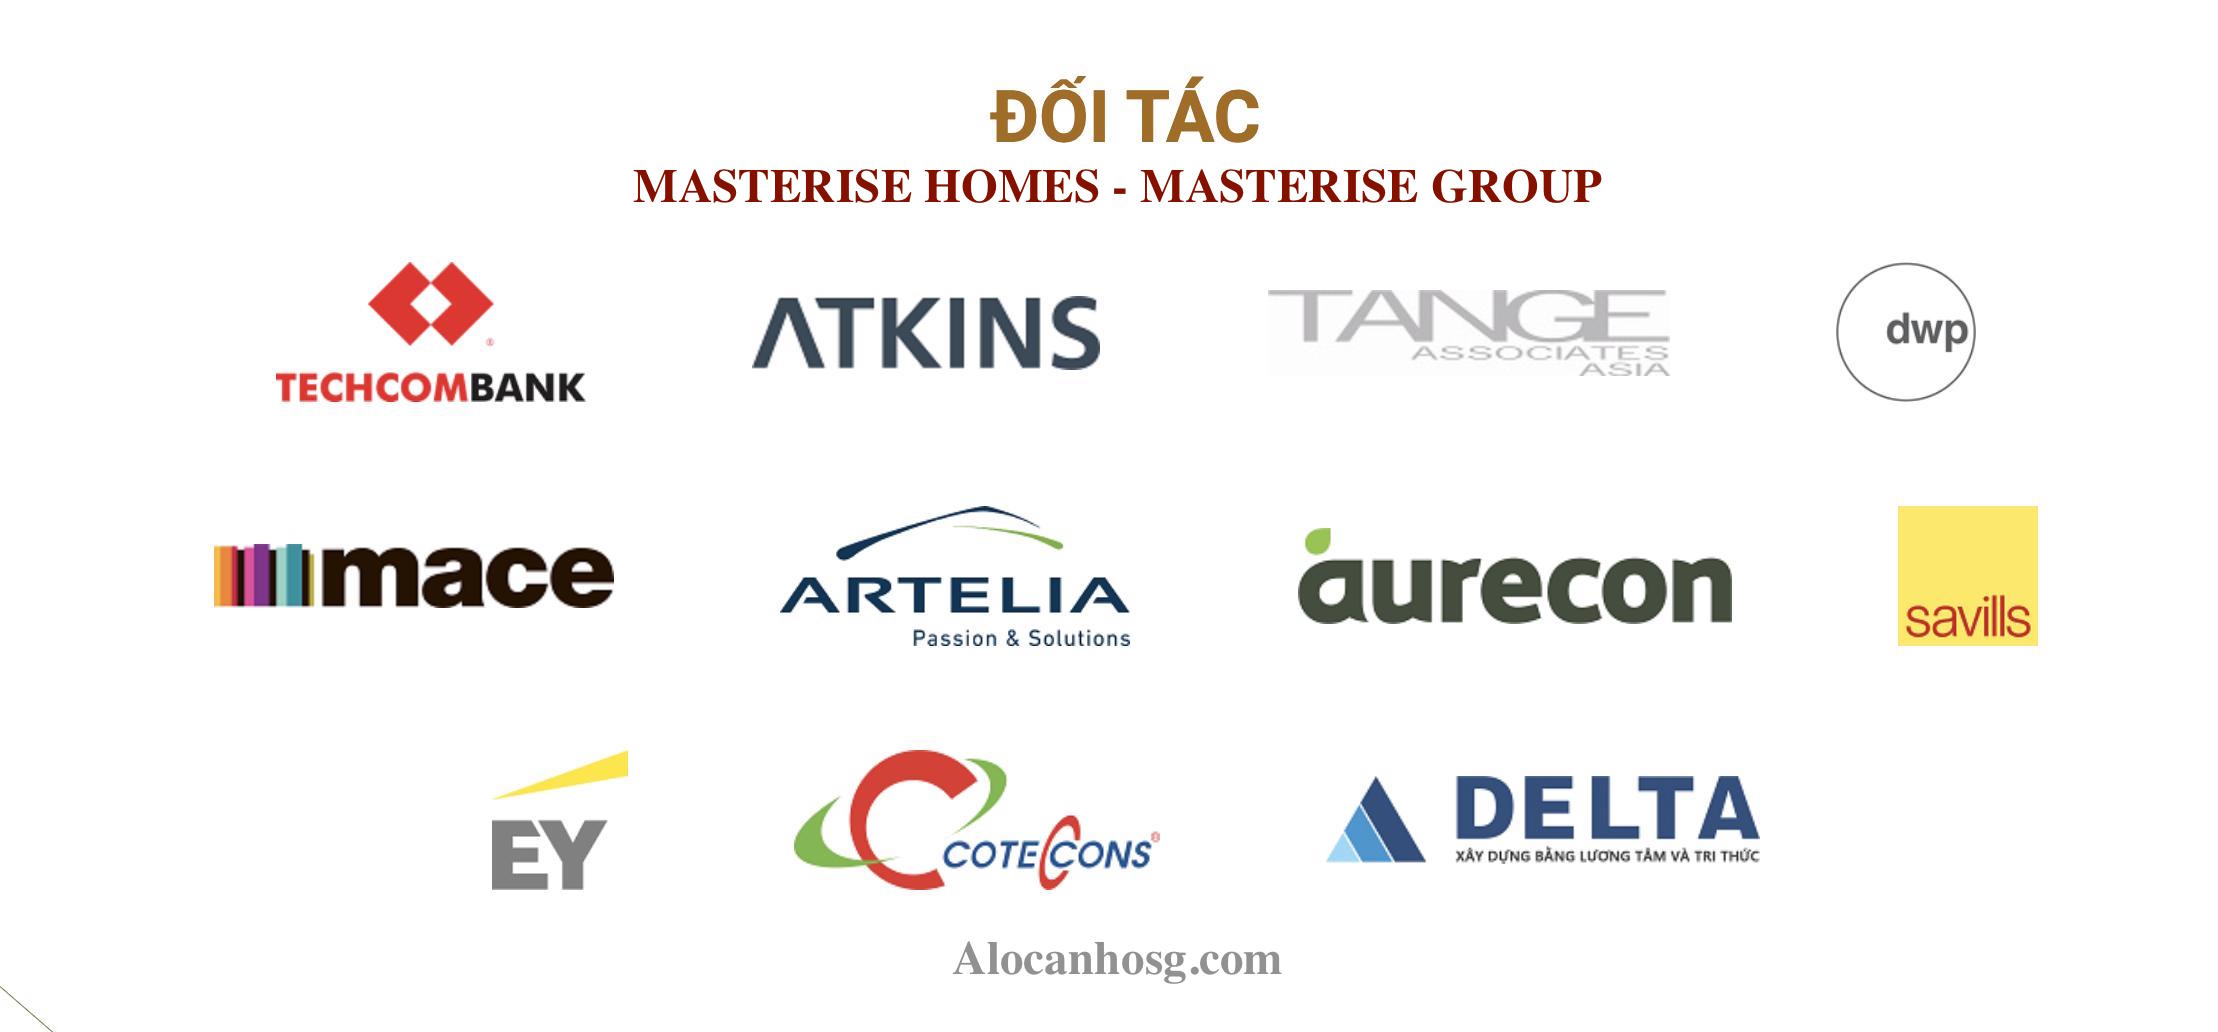 đối tác Masterise Homes - Masterise Group